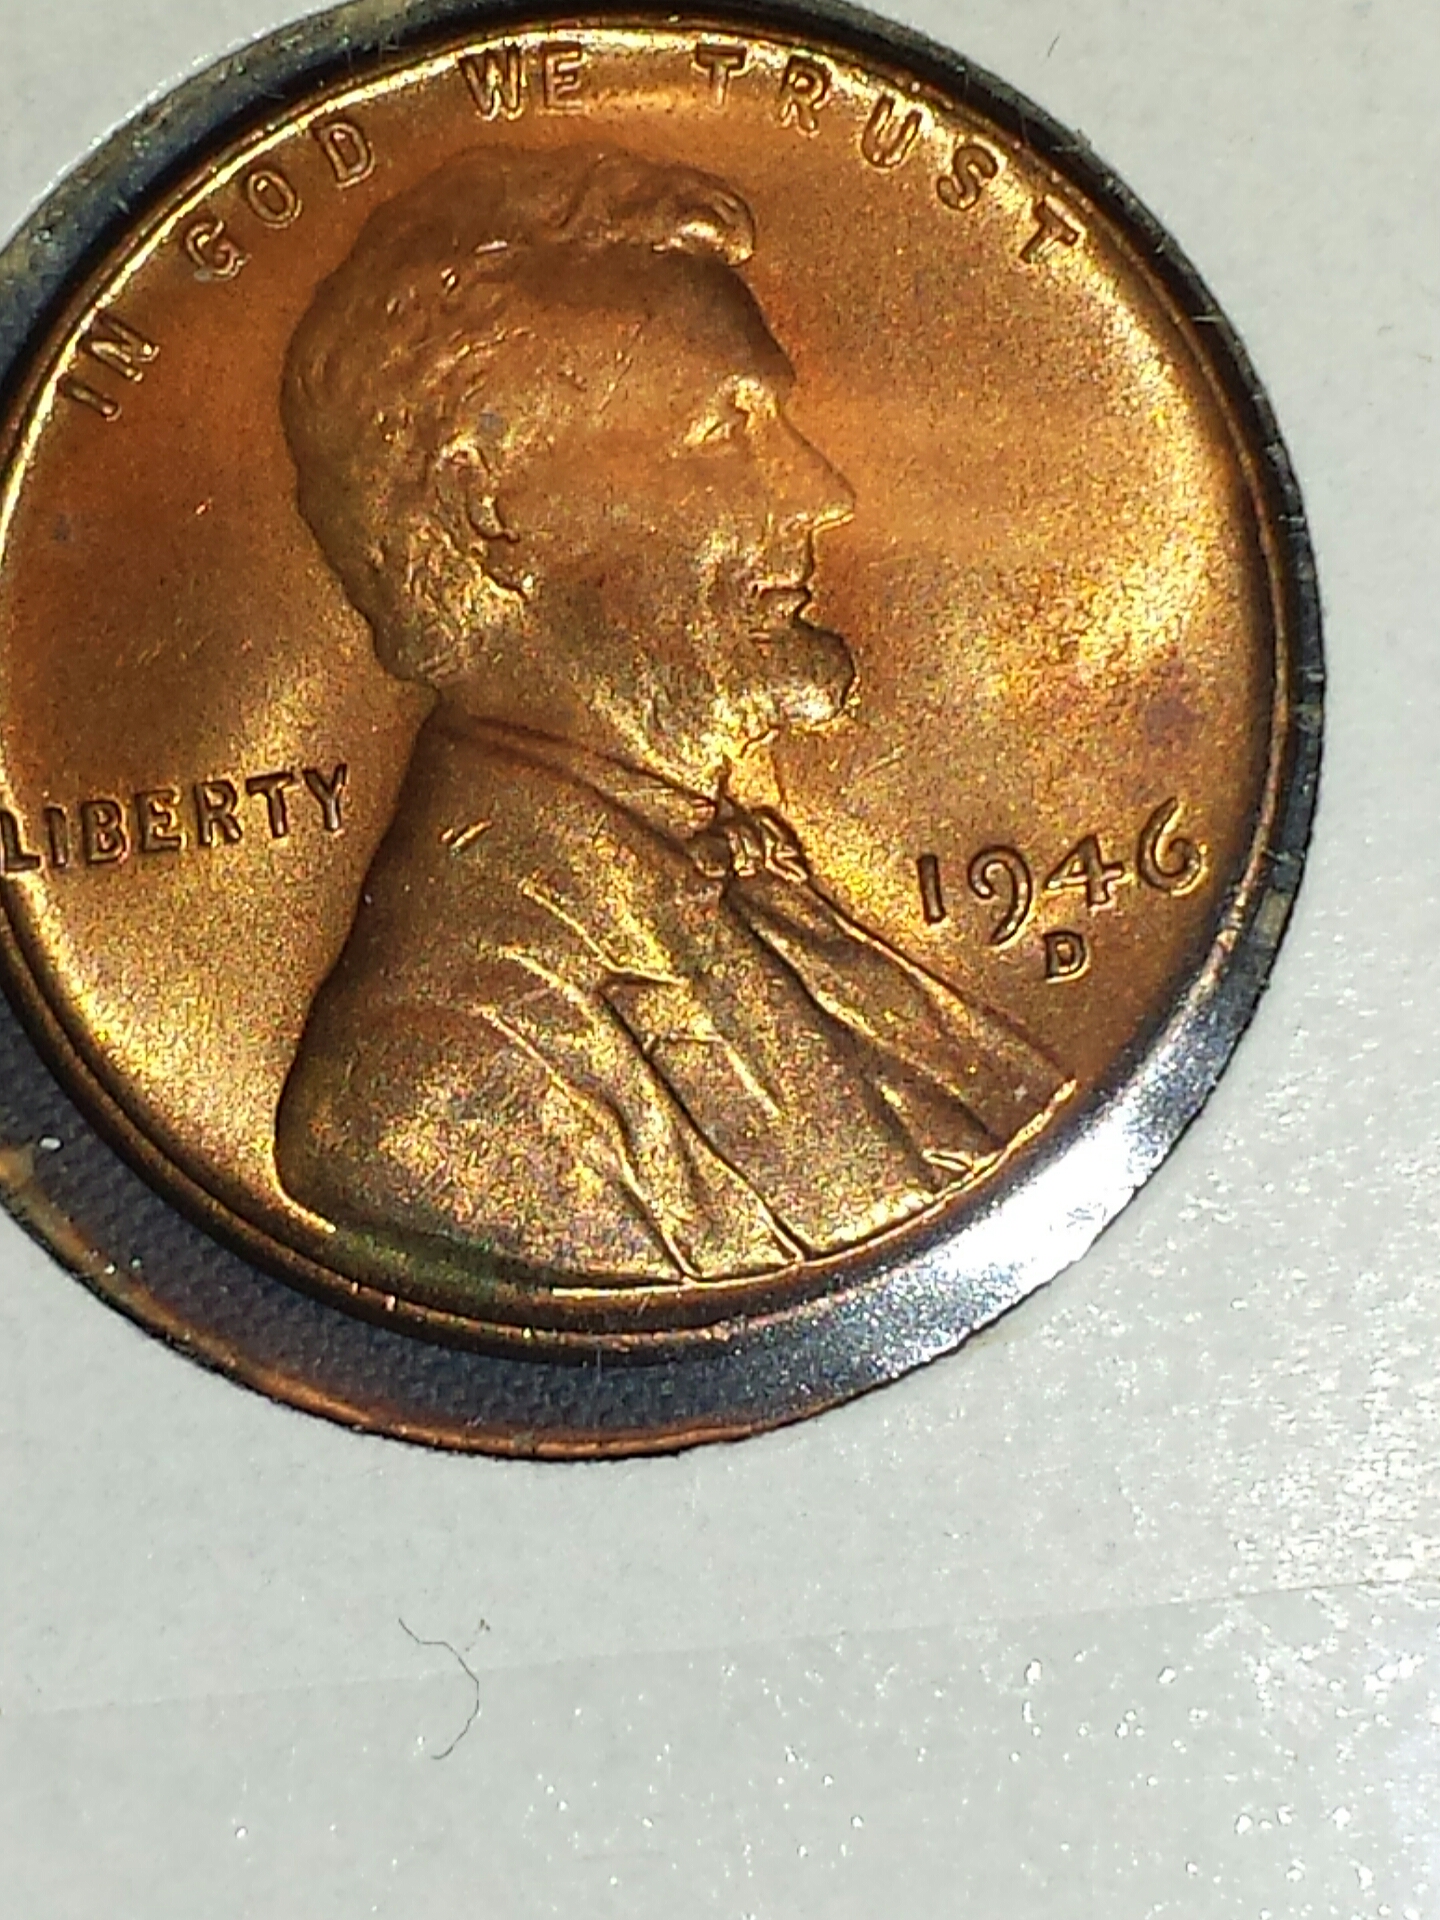 1946 cent.jpg